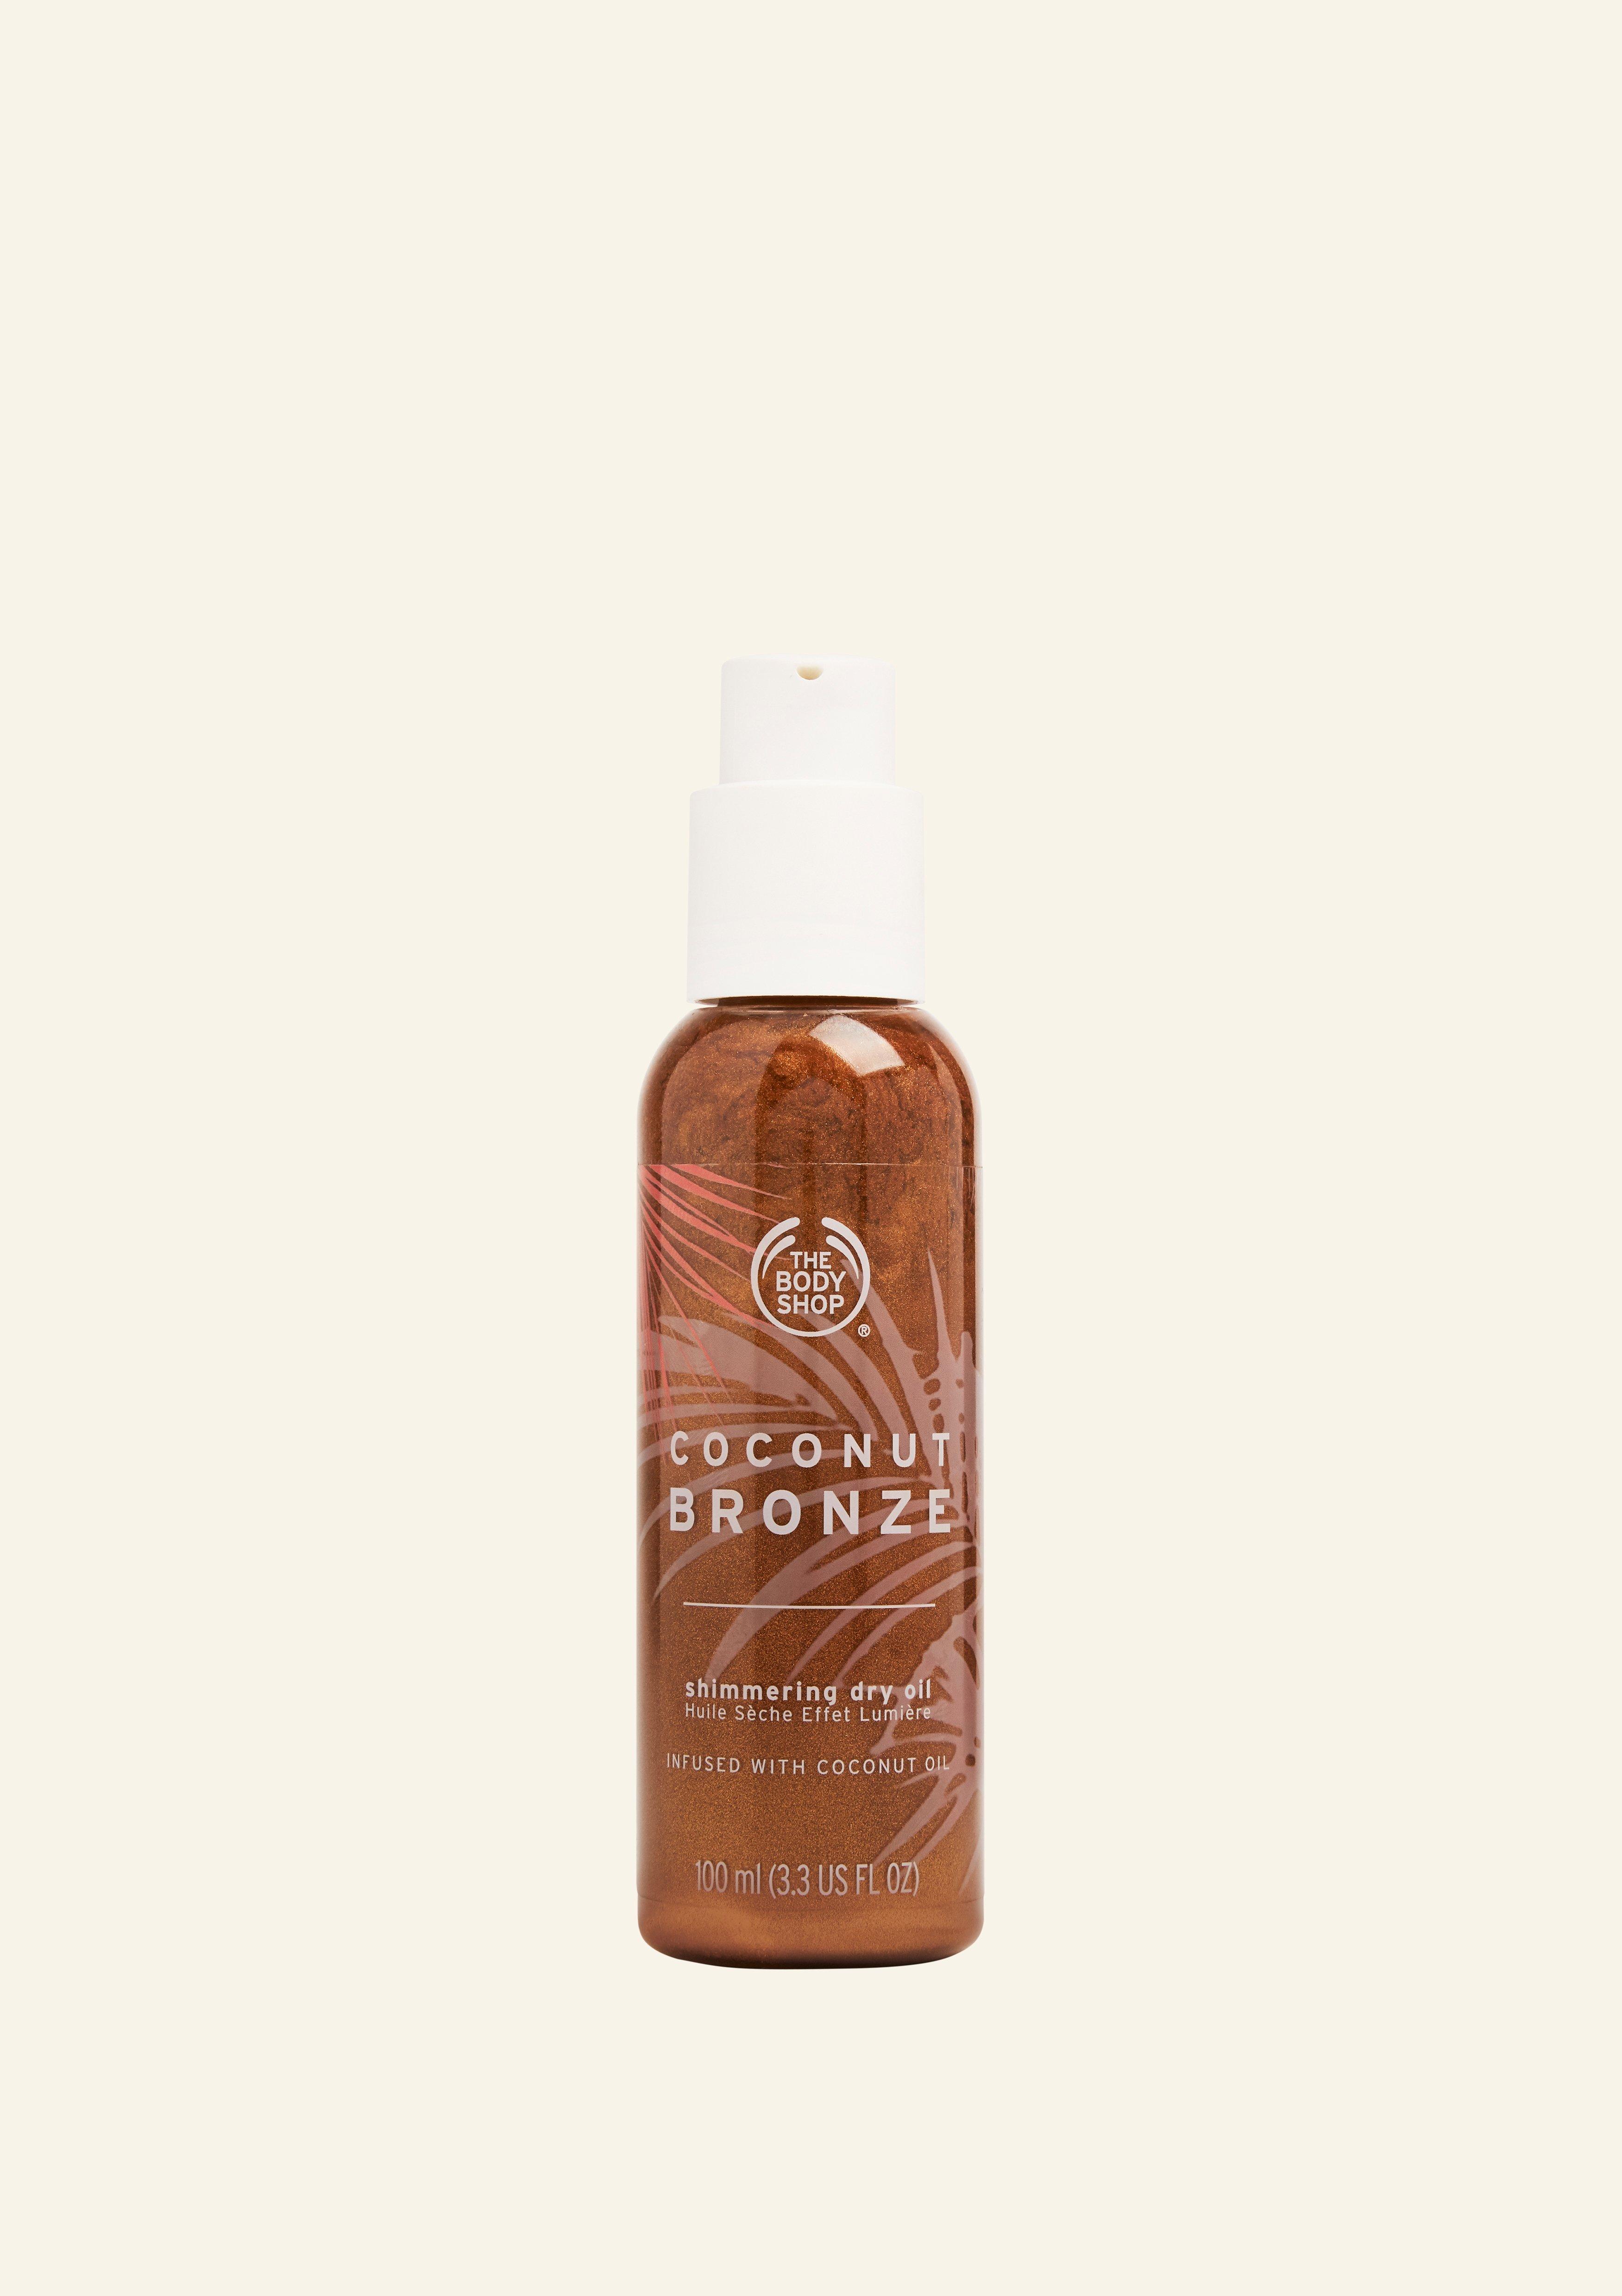 hiërarchie Belichamen ik ben slaperig Coconut Bronze Shimmering Dry Oil | The Body Shop®